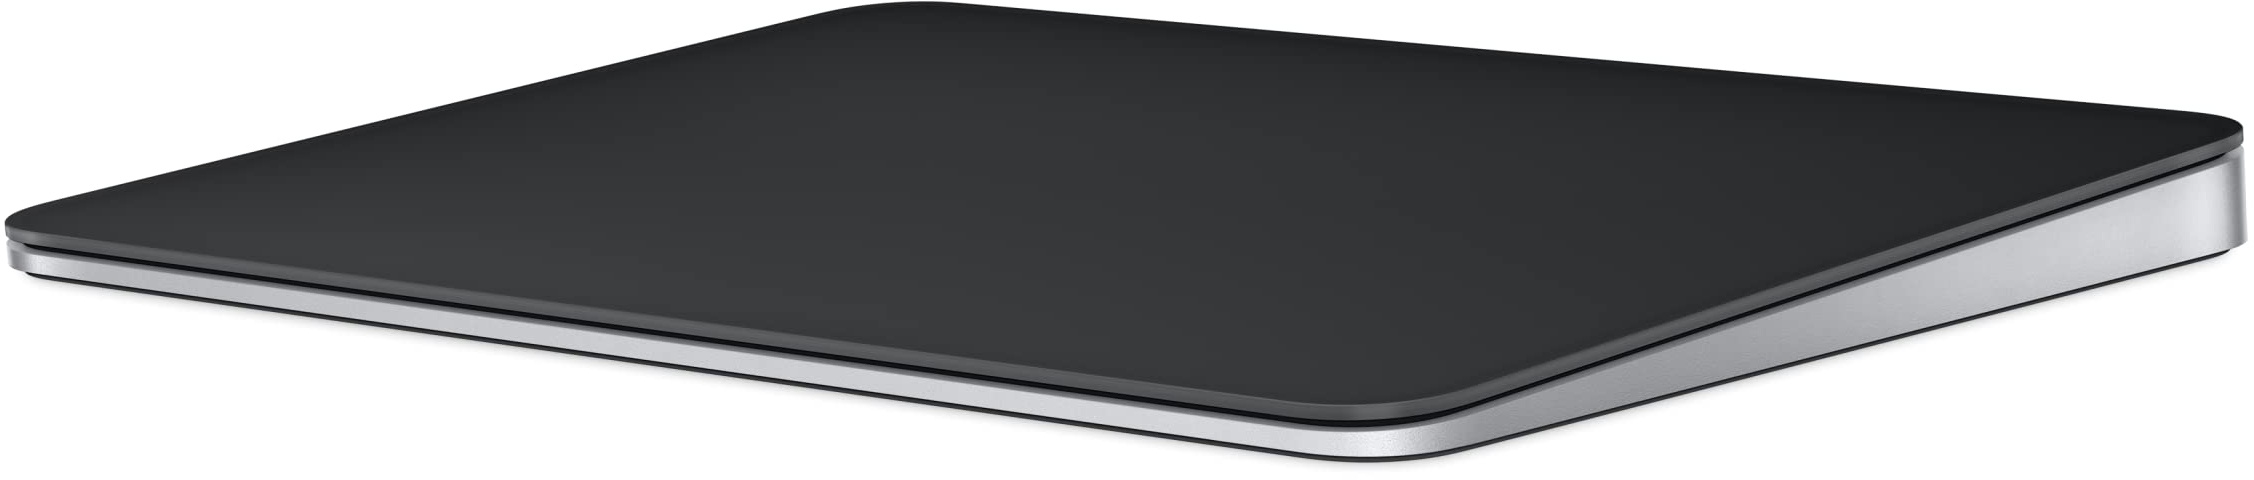 Apple Magic Trackpad: Bluetooth, wiederaufladbar. Kompatibel mit Mac oder iPad; Schwarz, Multi-Touch Oberfläche